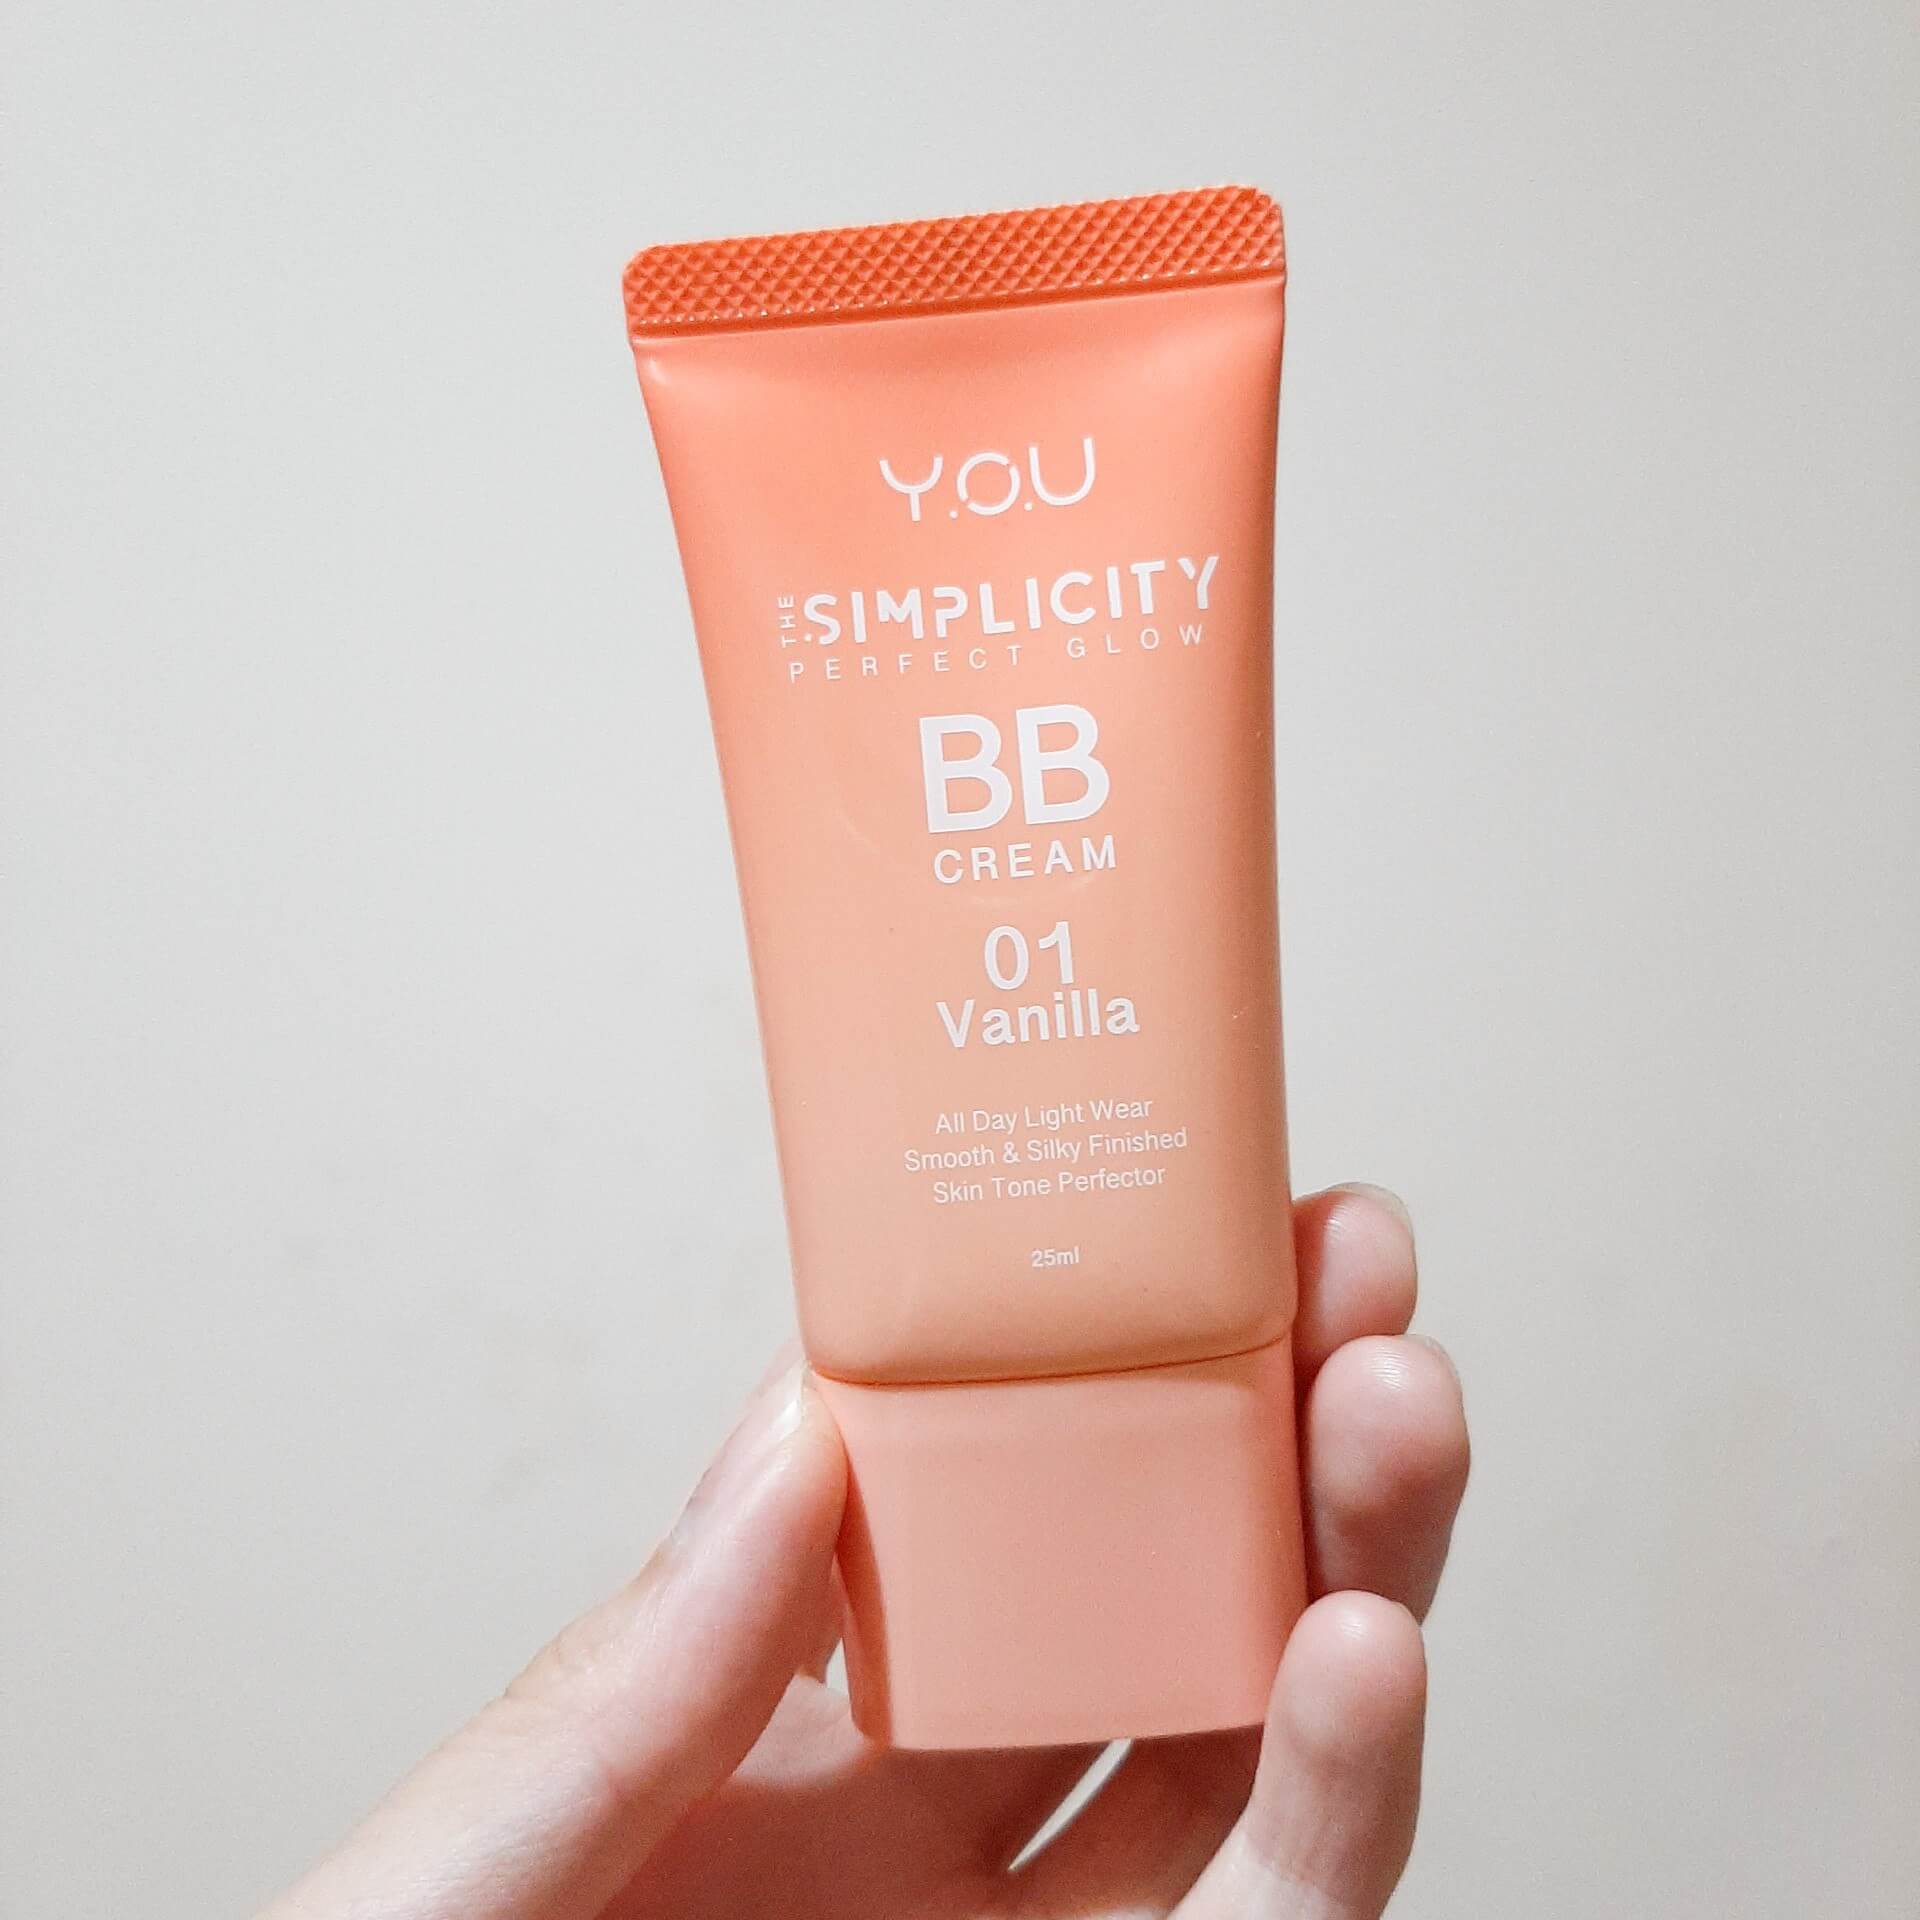 Y.O.U The Simplicity Perfect Glow BB Cream 01 Vanilla 25g